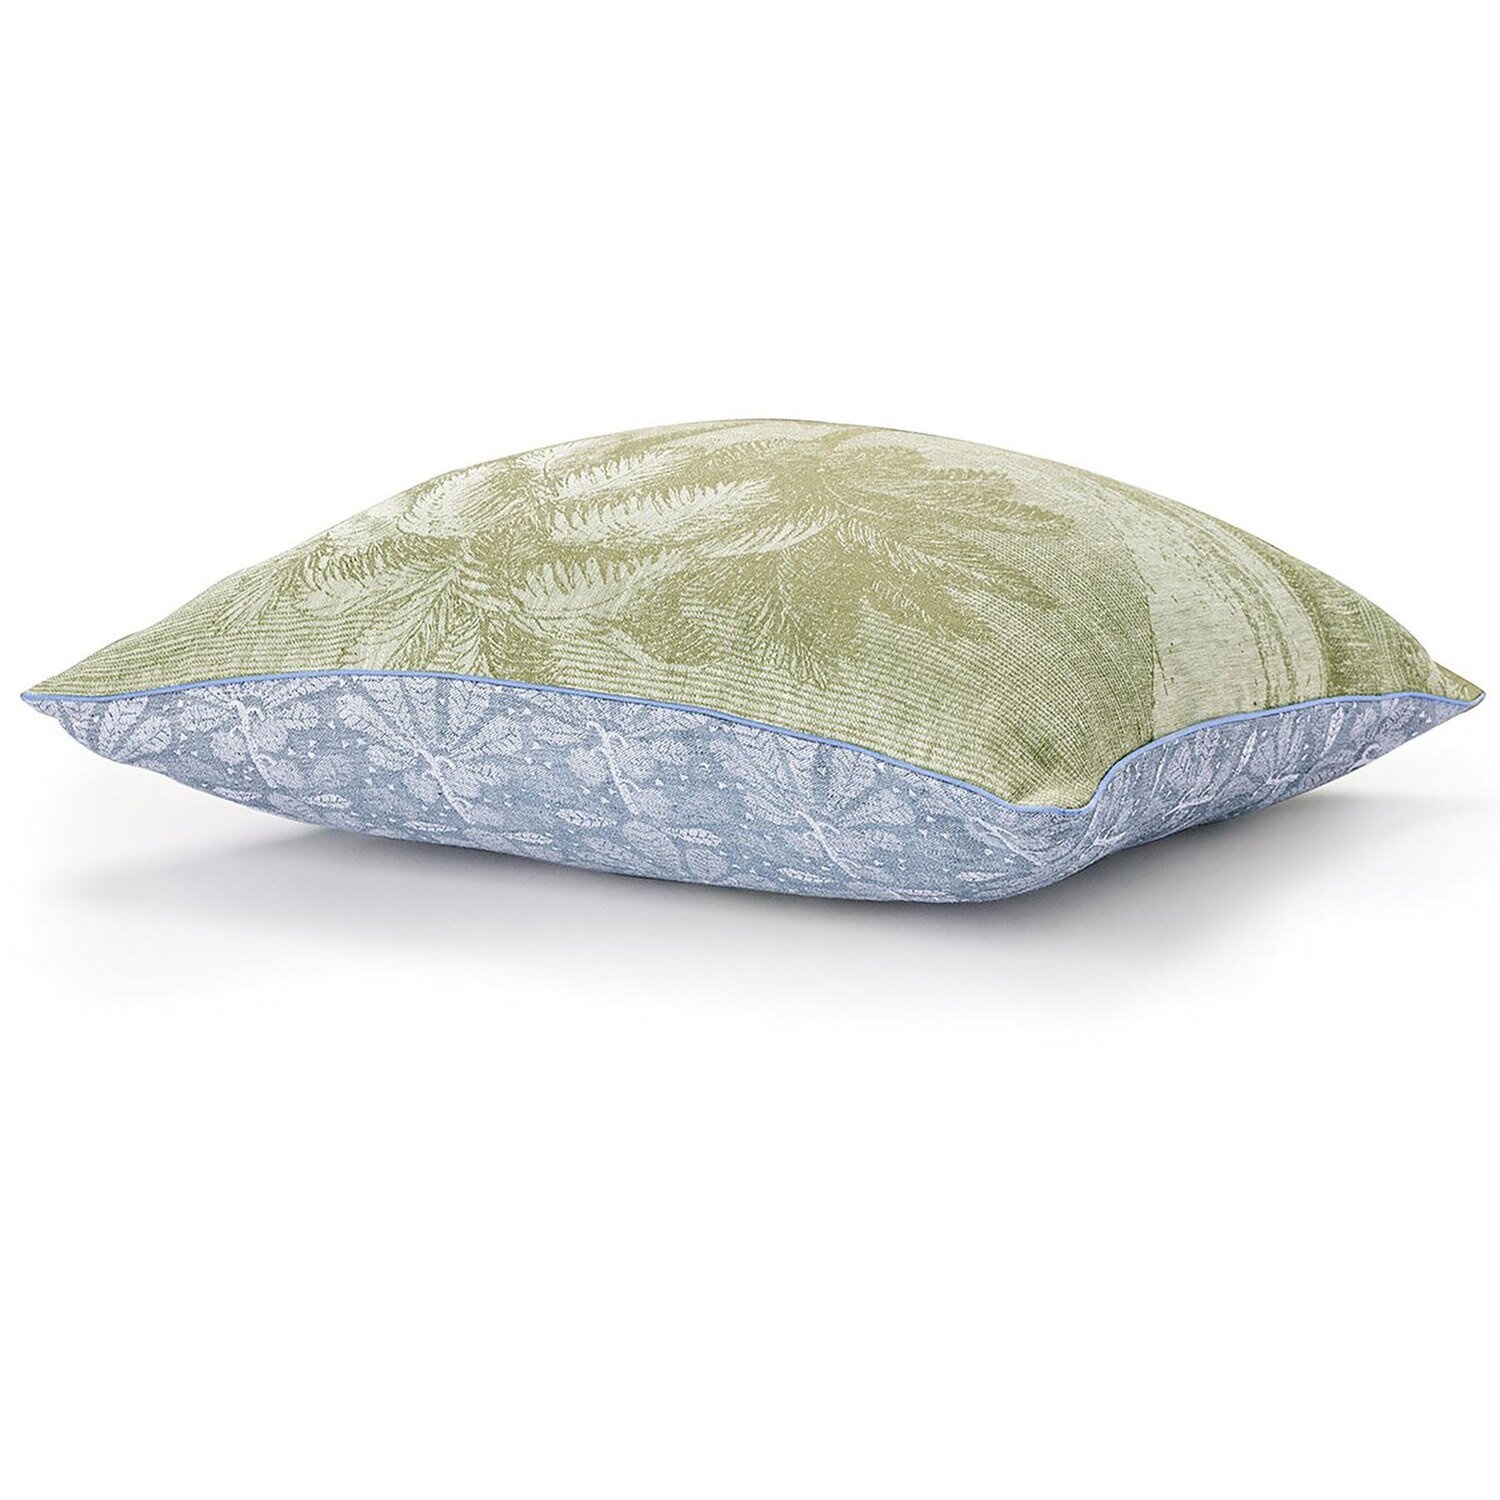 Le Jacquard Francais Cushion Cover Croisiere Nil Green 100% Linen 26919